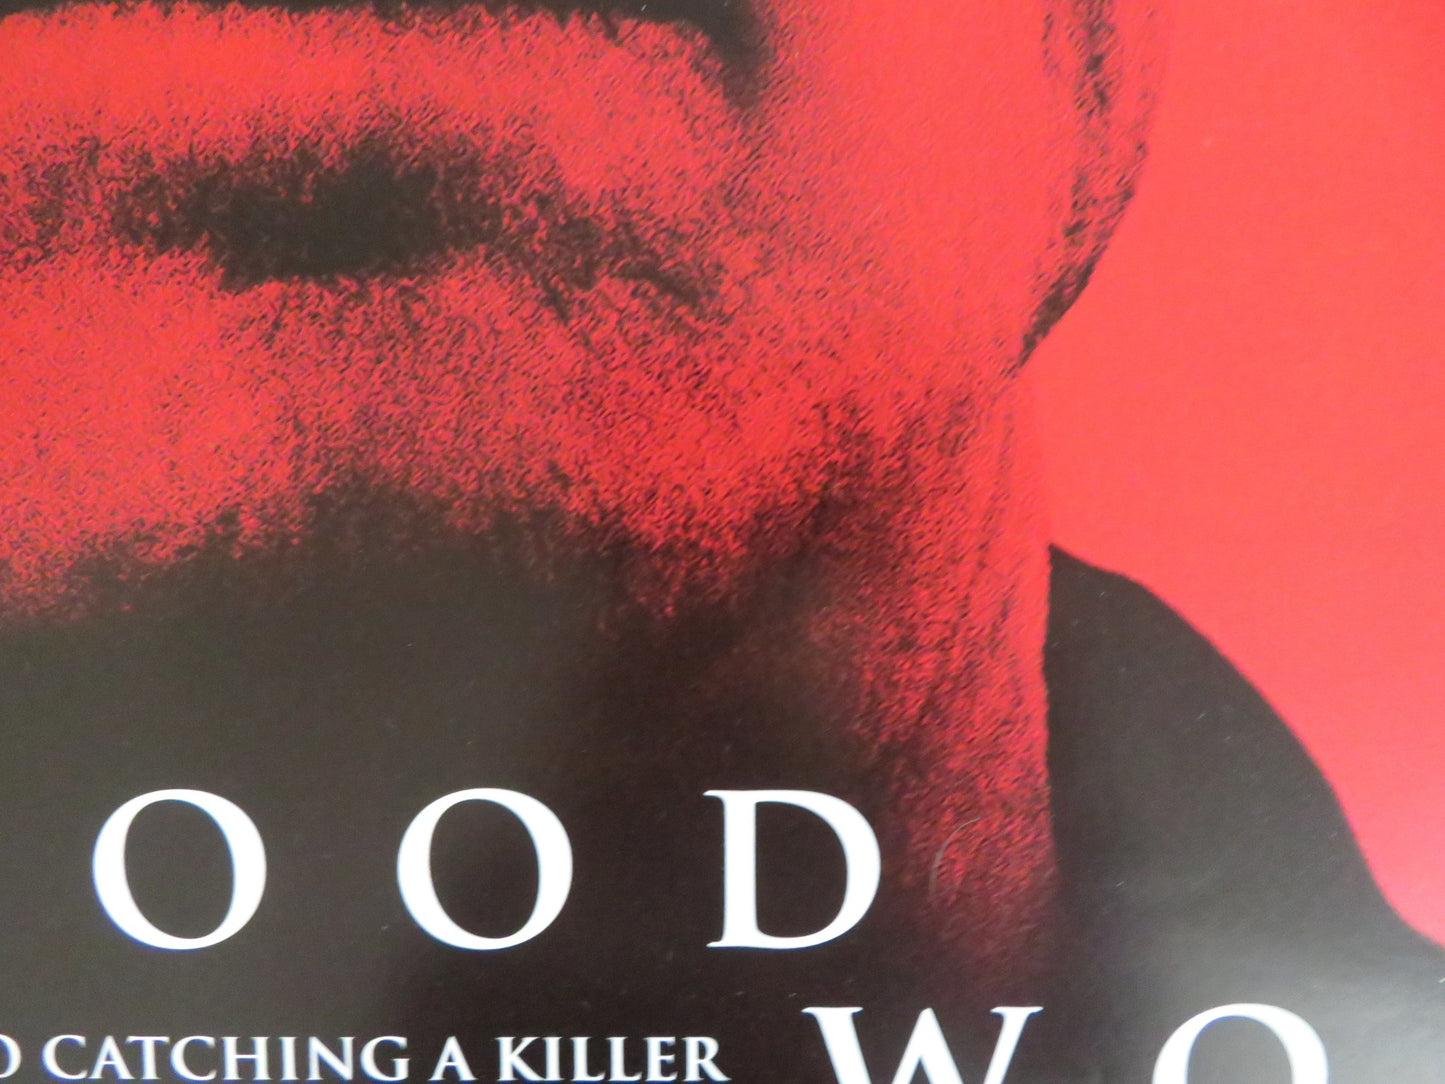 BLOOD WORK VHS VIDEO POSTER CLINT EASTWOOD JEFF DANIELS 2002